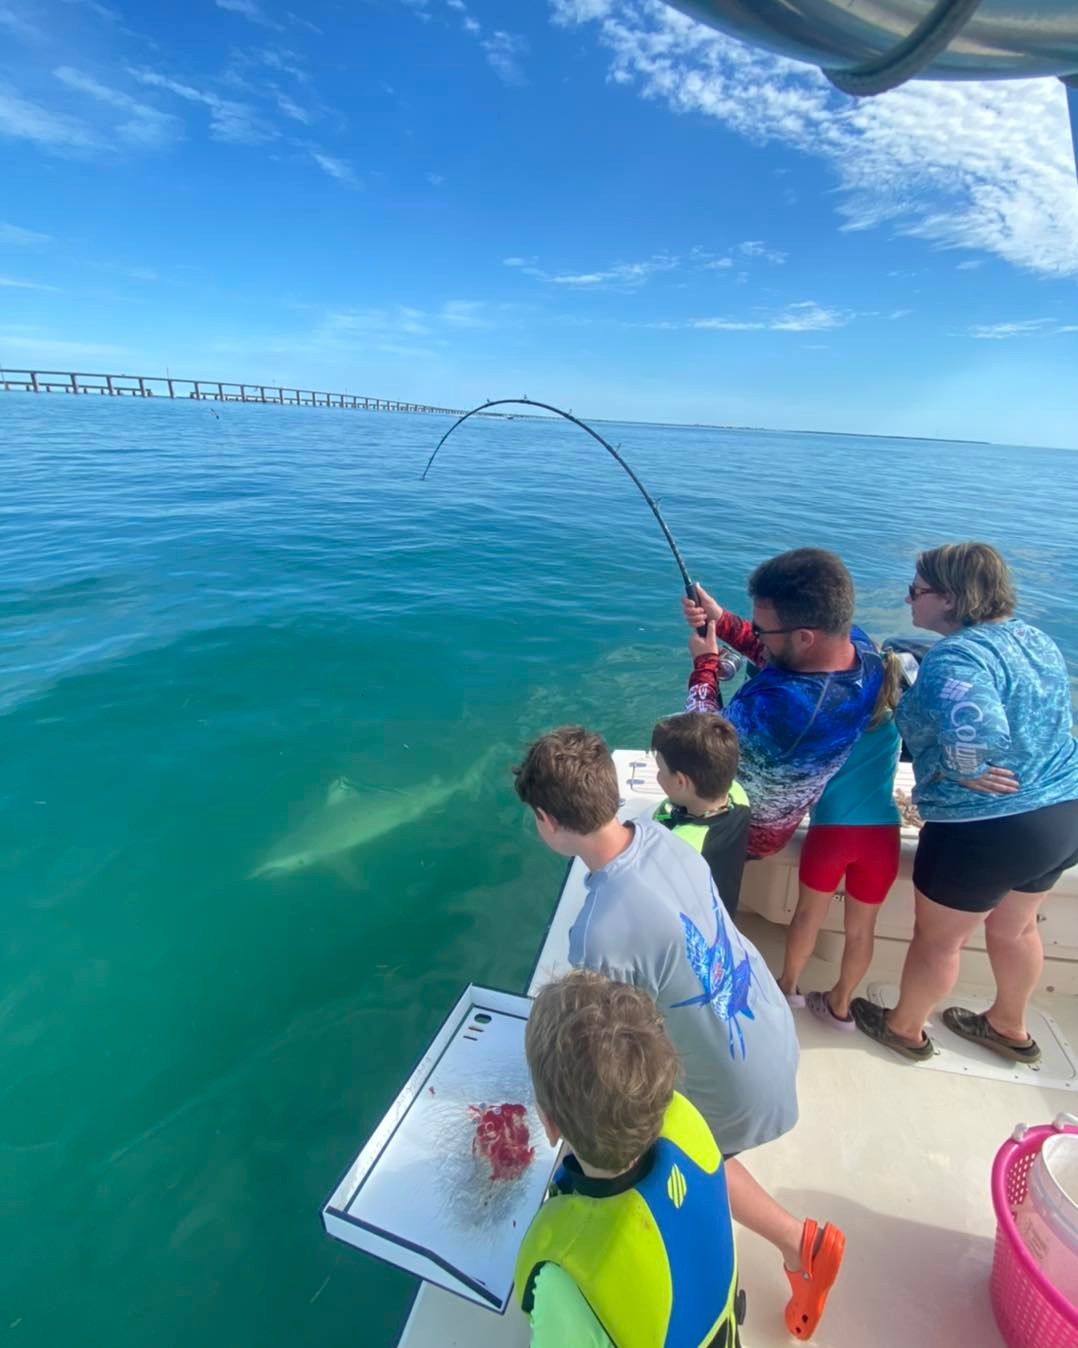 Florida Friendly Fishing Guide Certification Program - Florida Sea